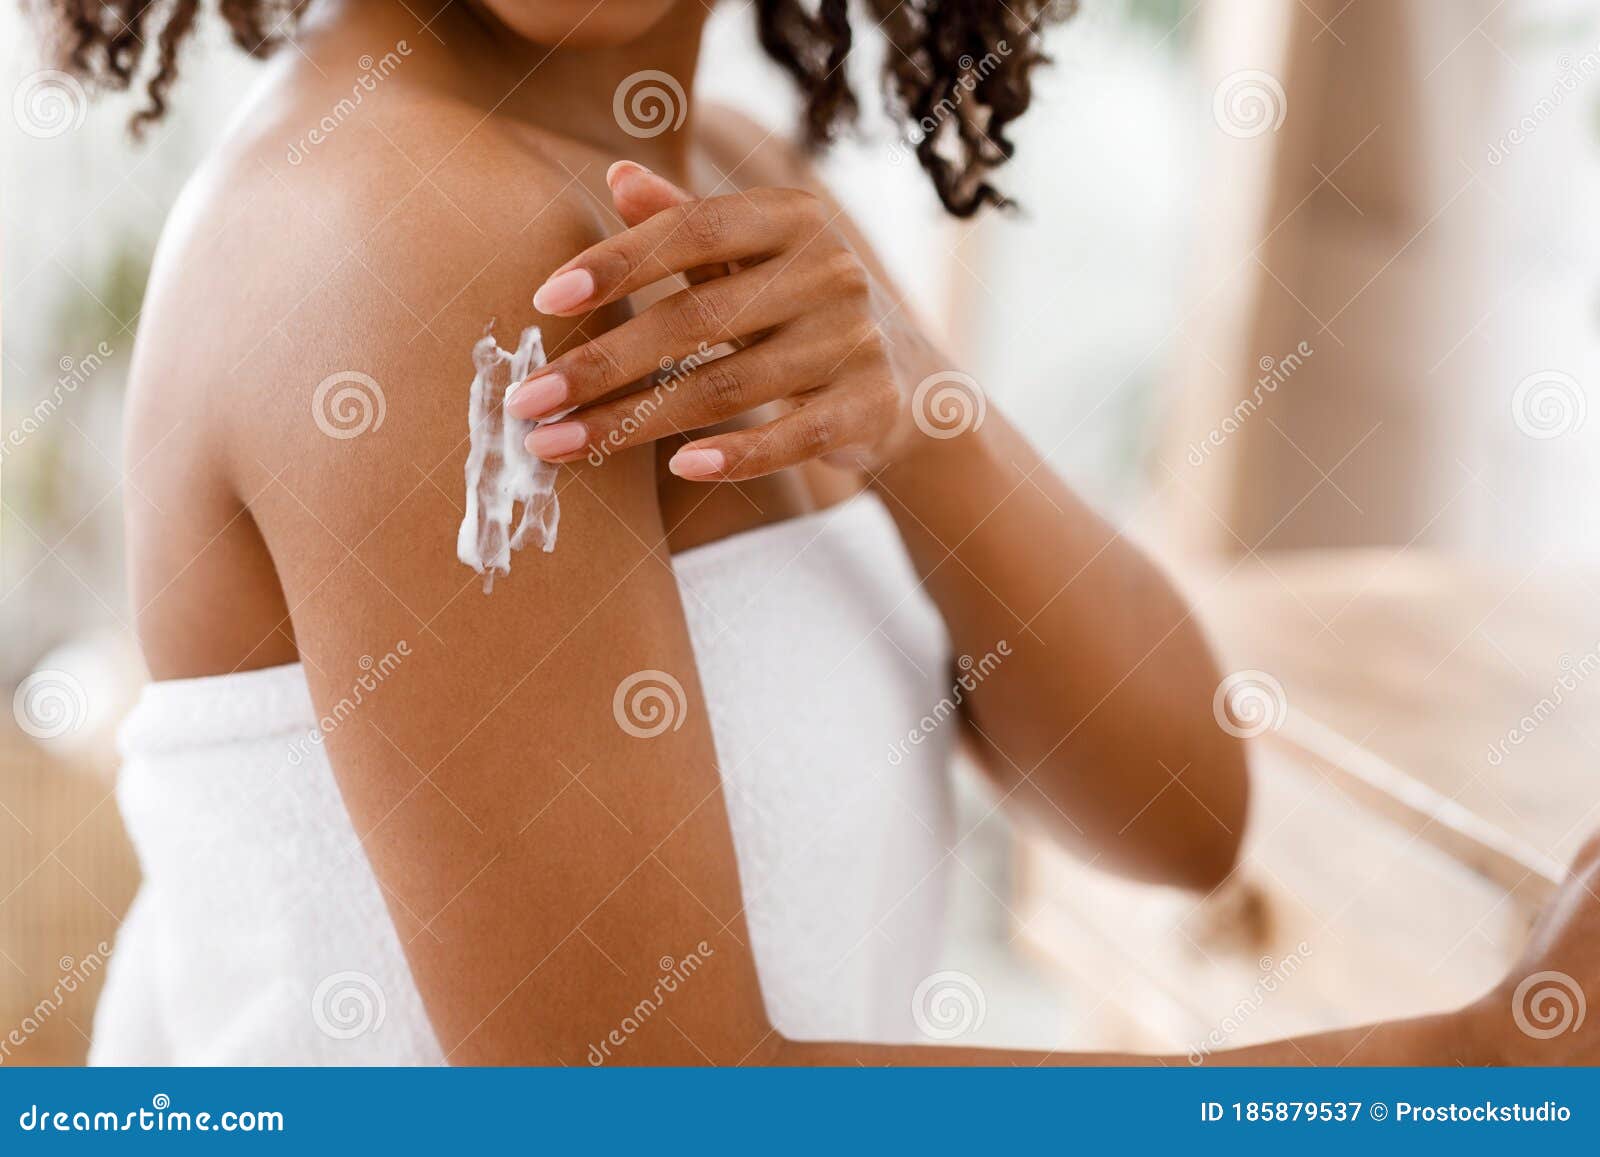 black woman applying moisturizing body lotion on skin after shower